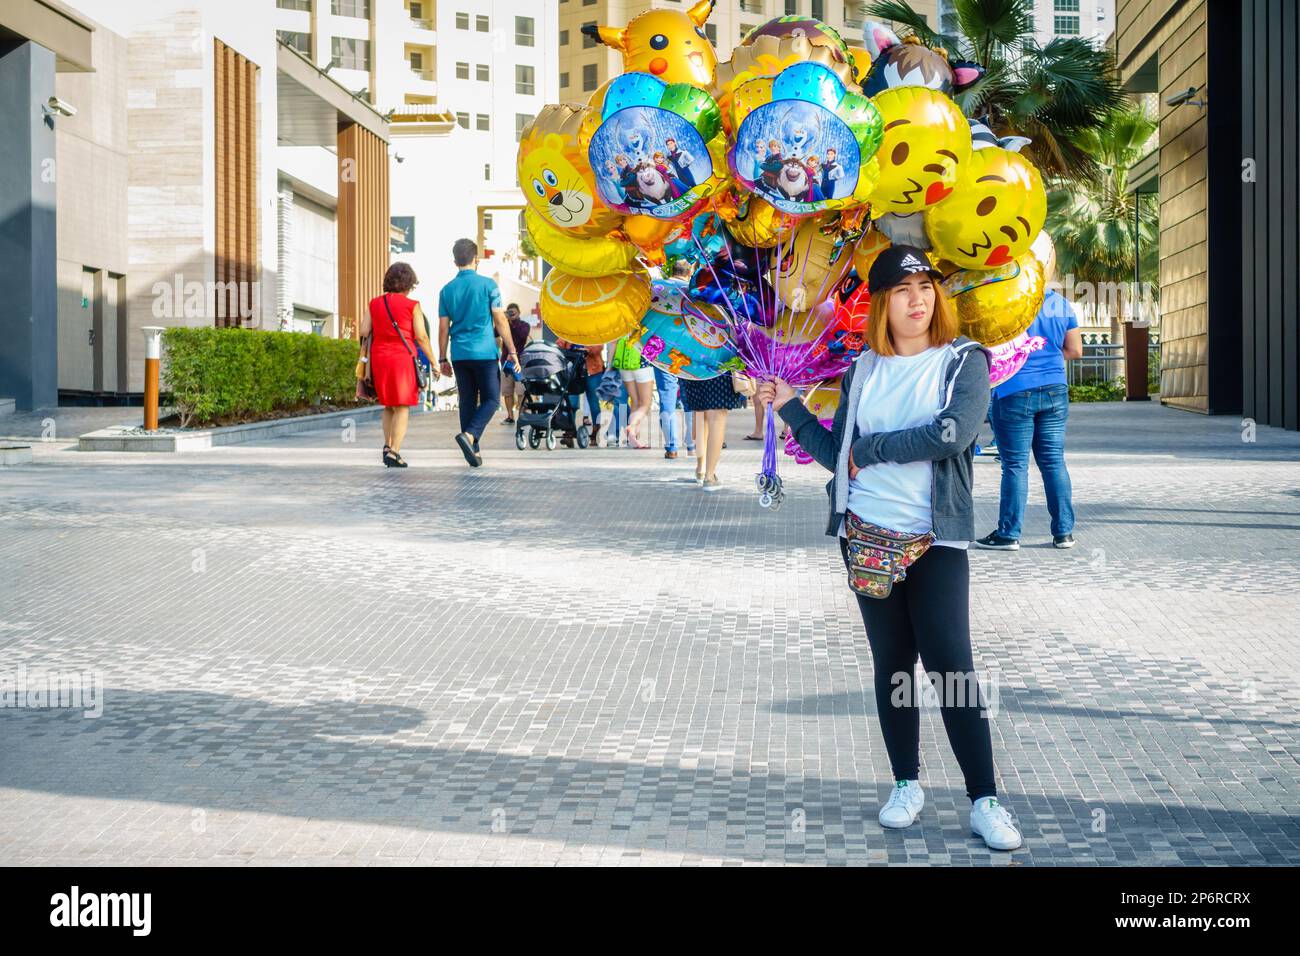 Dubai, UAE, February 23, 2018: A party balloon vendor at the Jumeirah Beach Residence (JBR) Walk - a polular destination for food, shopping and entert Stock Photo